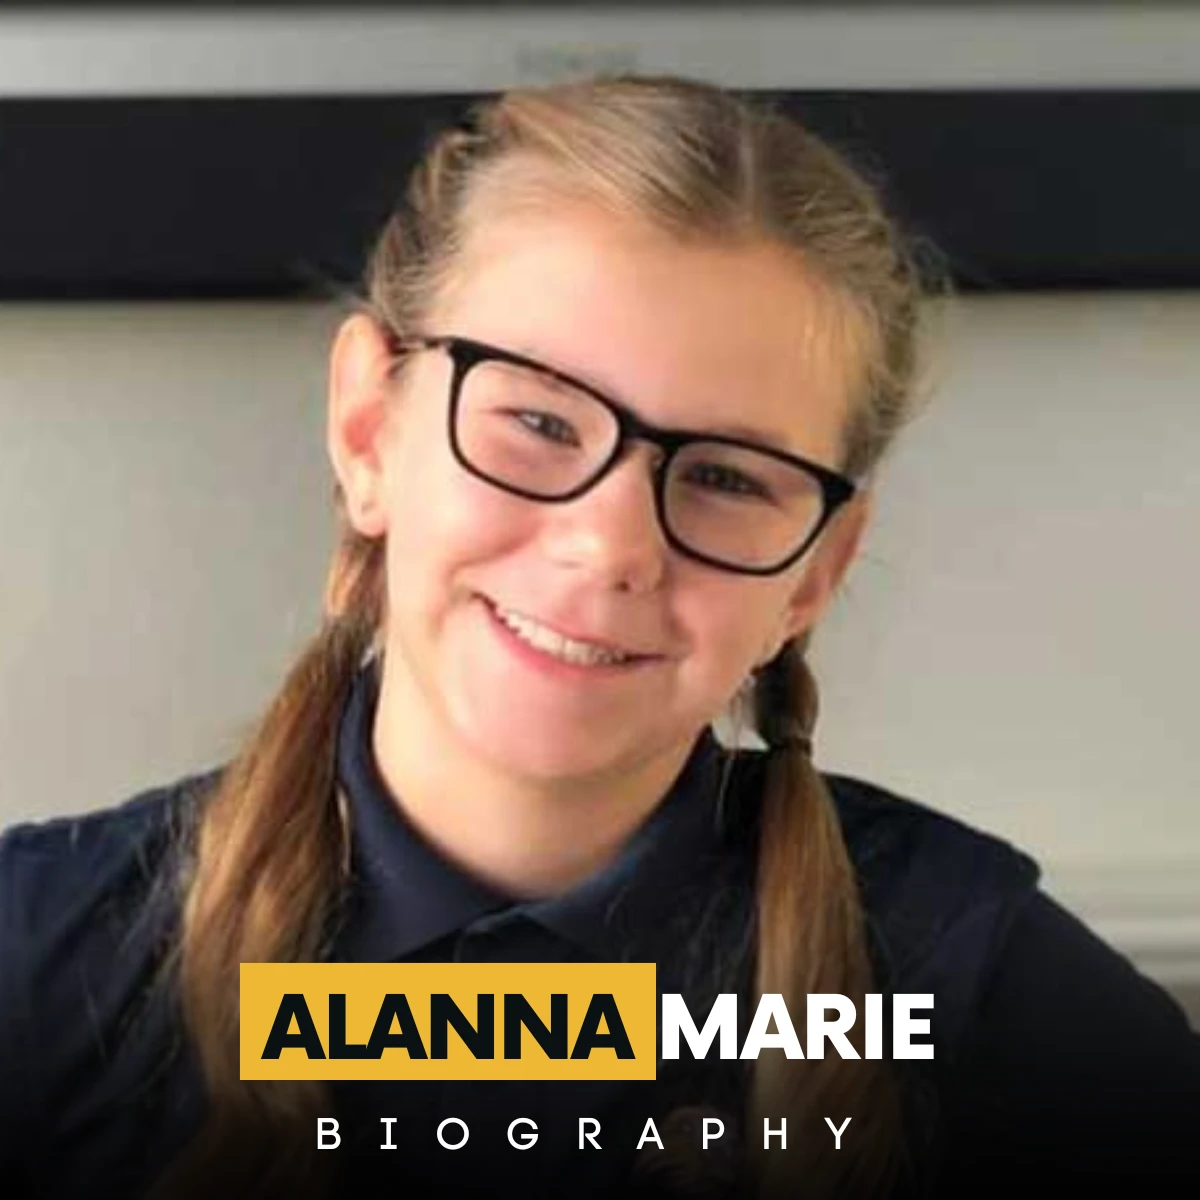 Alanna Marie Biography